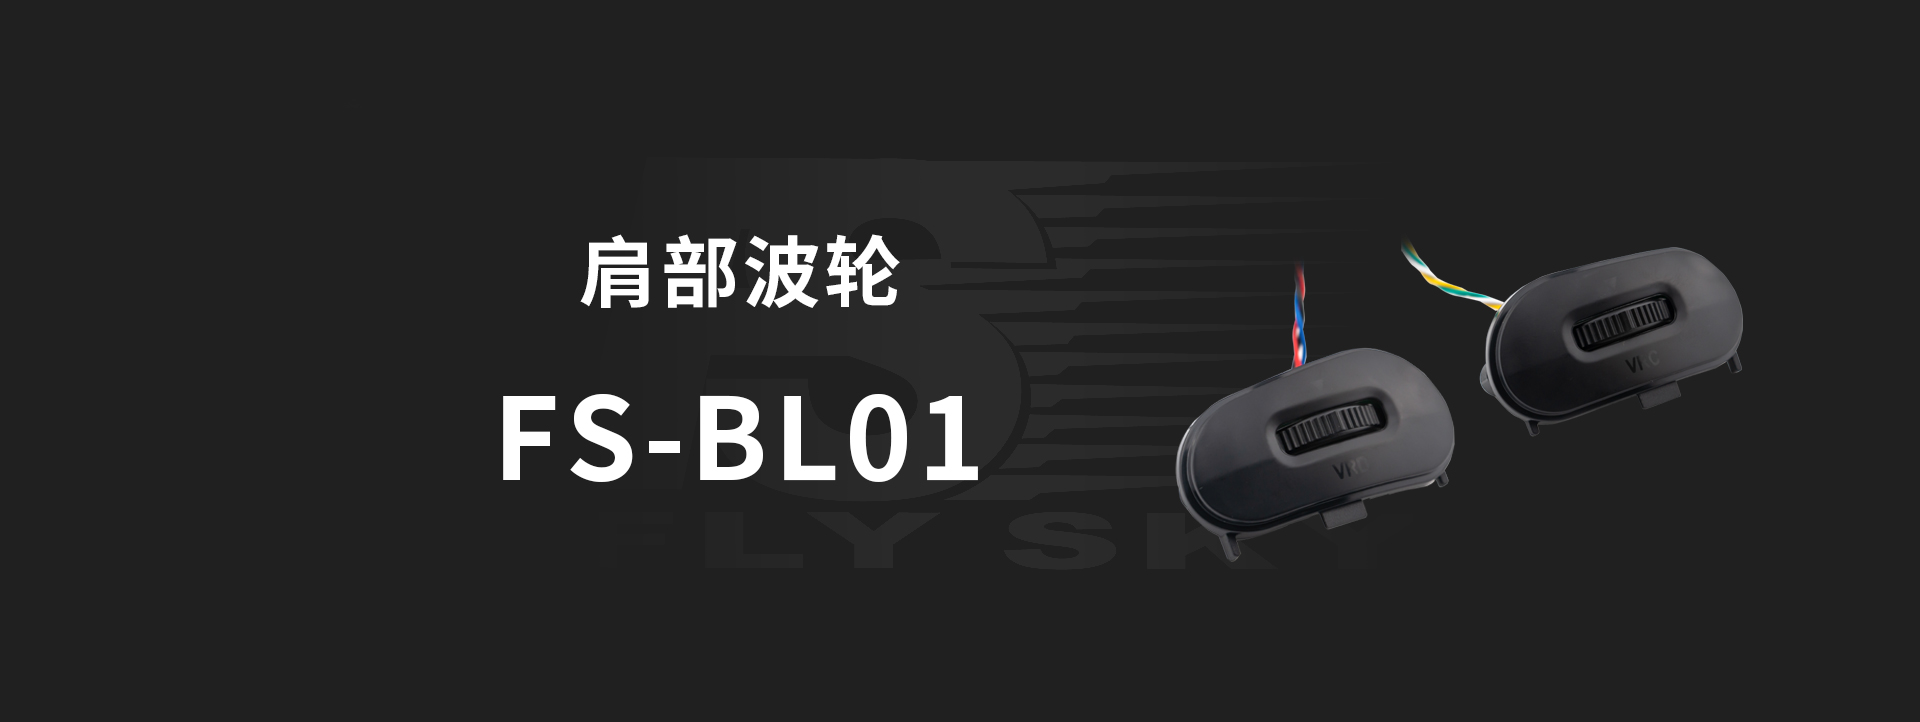 FS-BL01